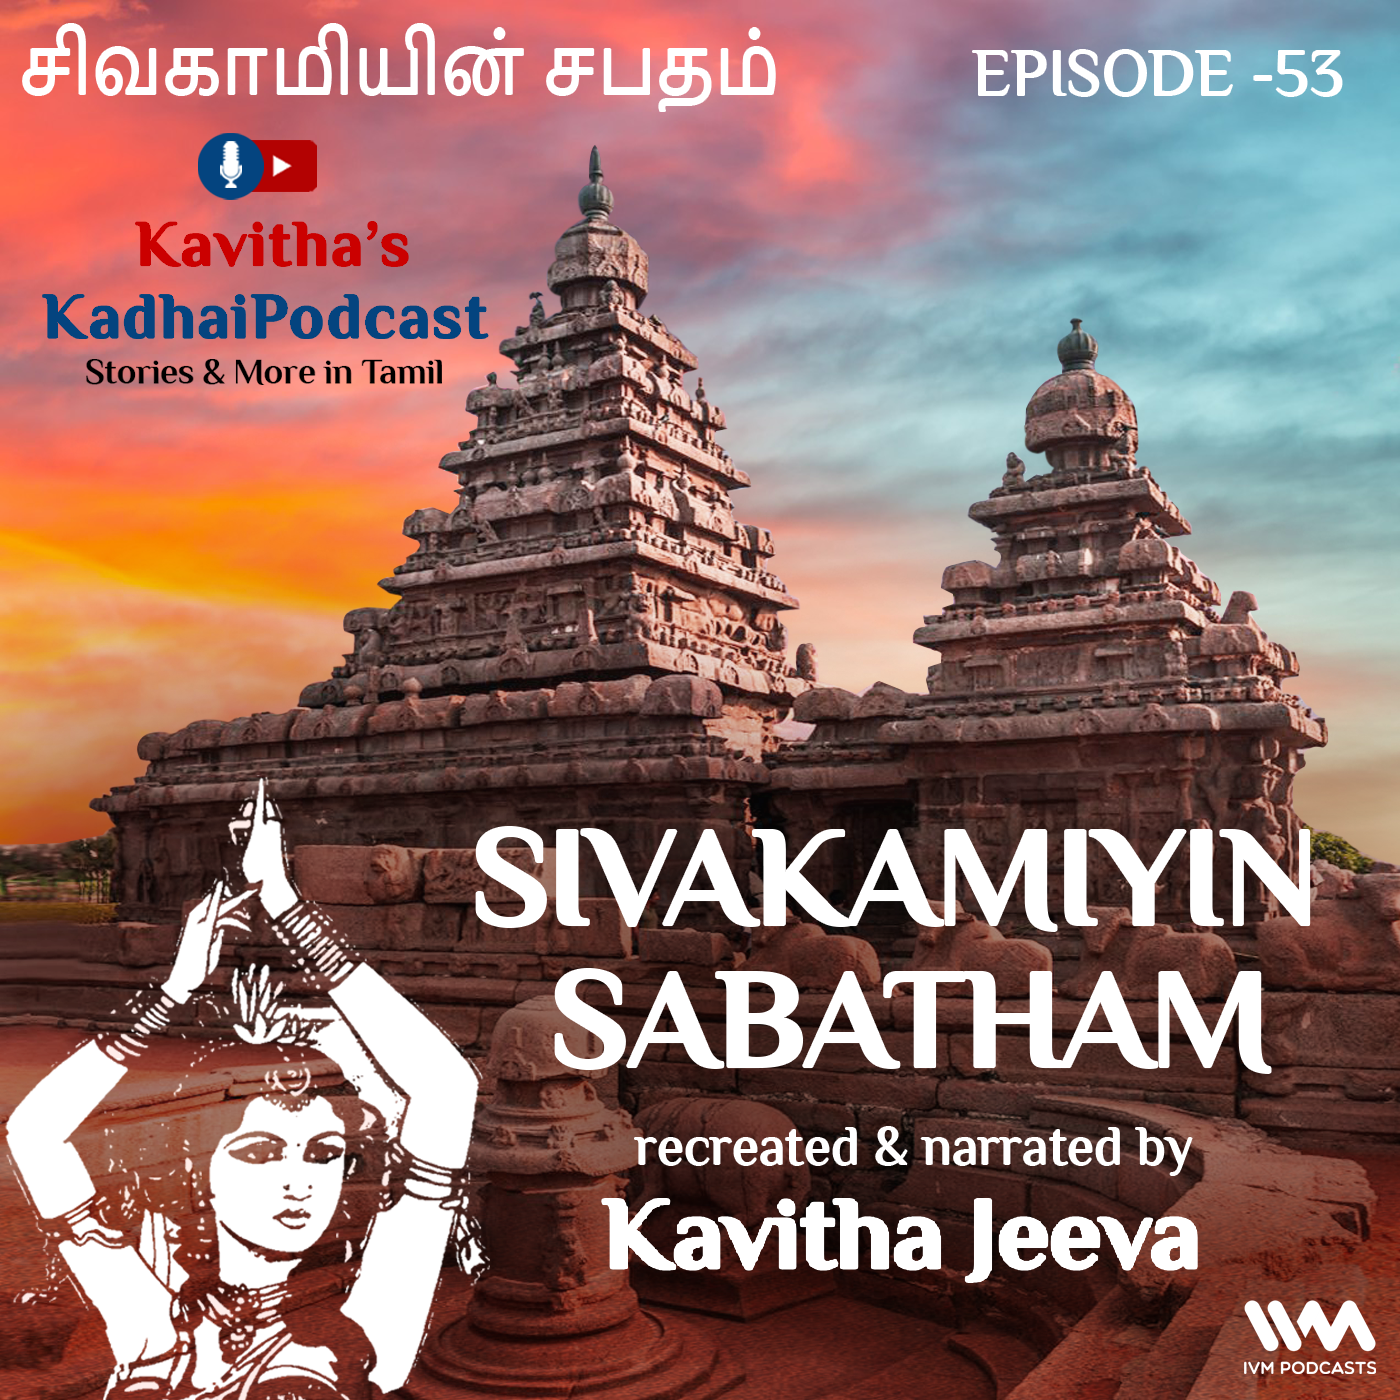 KadhaiPodcast's Sivakamiyin Sabatham - Episode # 53